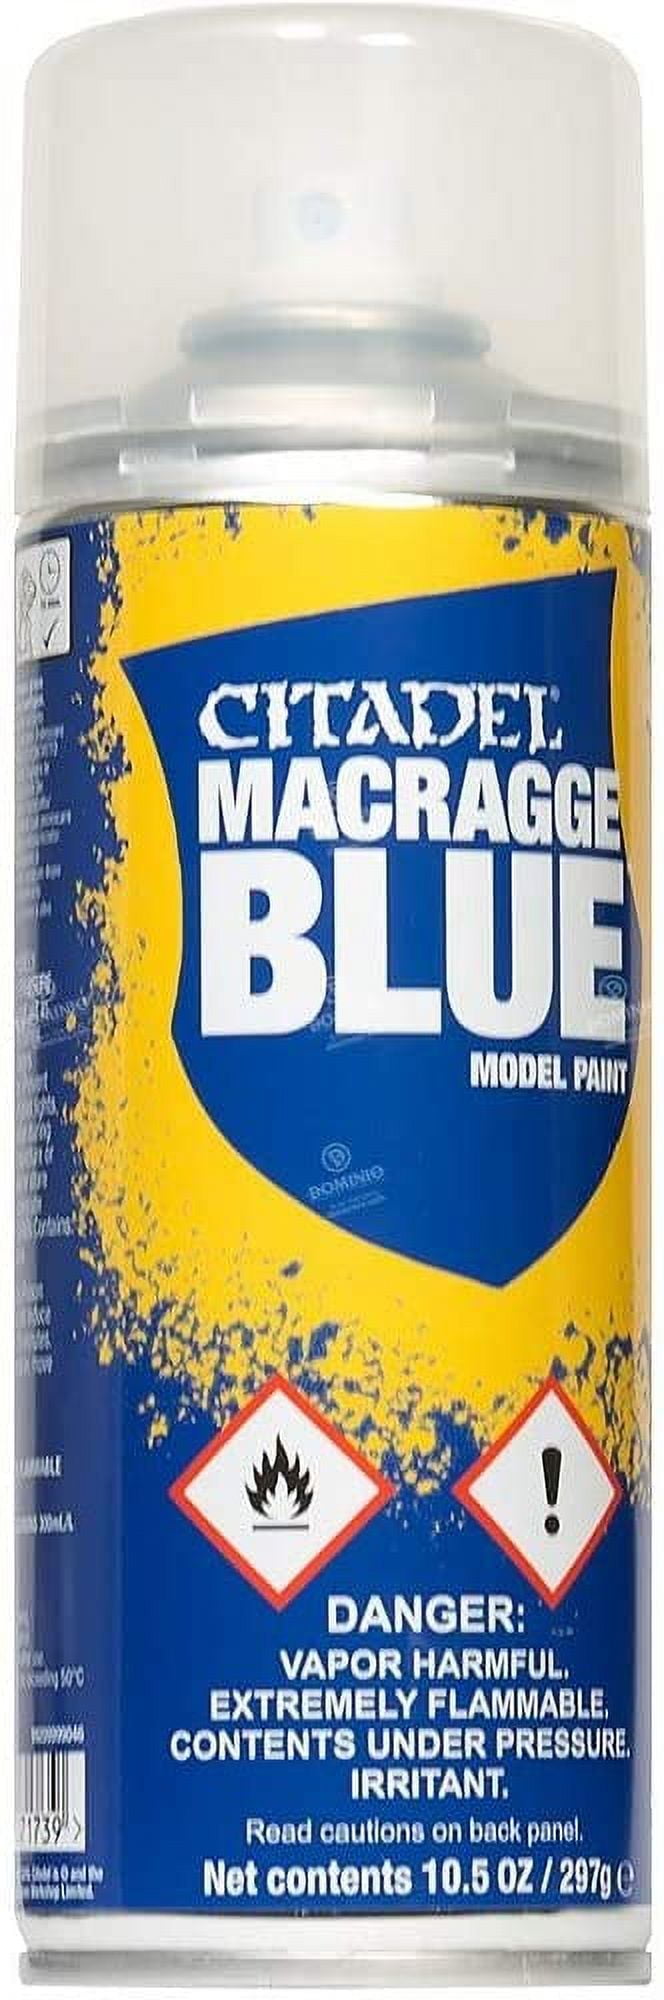 Games Workshop Citadel Macragge Blue Spray Paint - Model Paint Primer 400  ml Can 